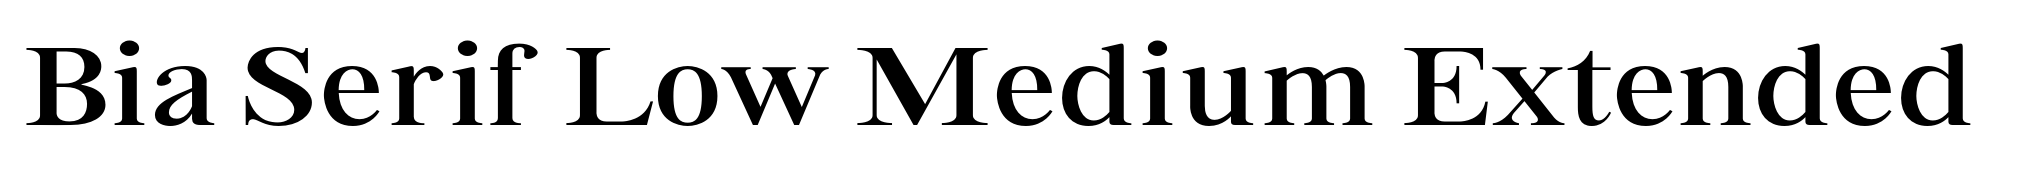 Bia Serif Low Medium Extended image